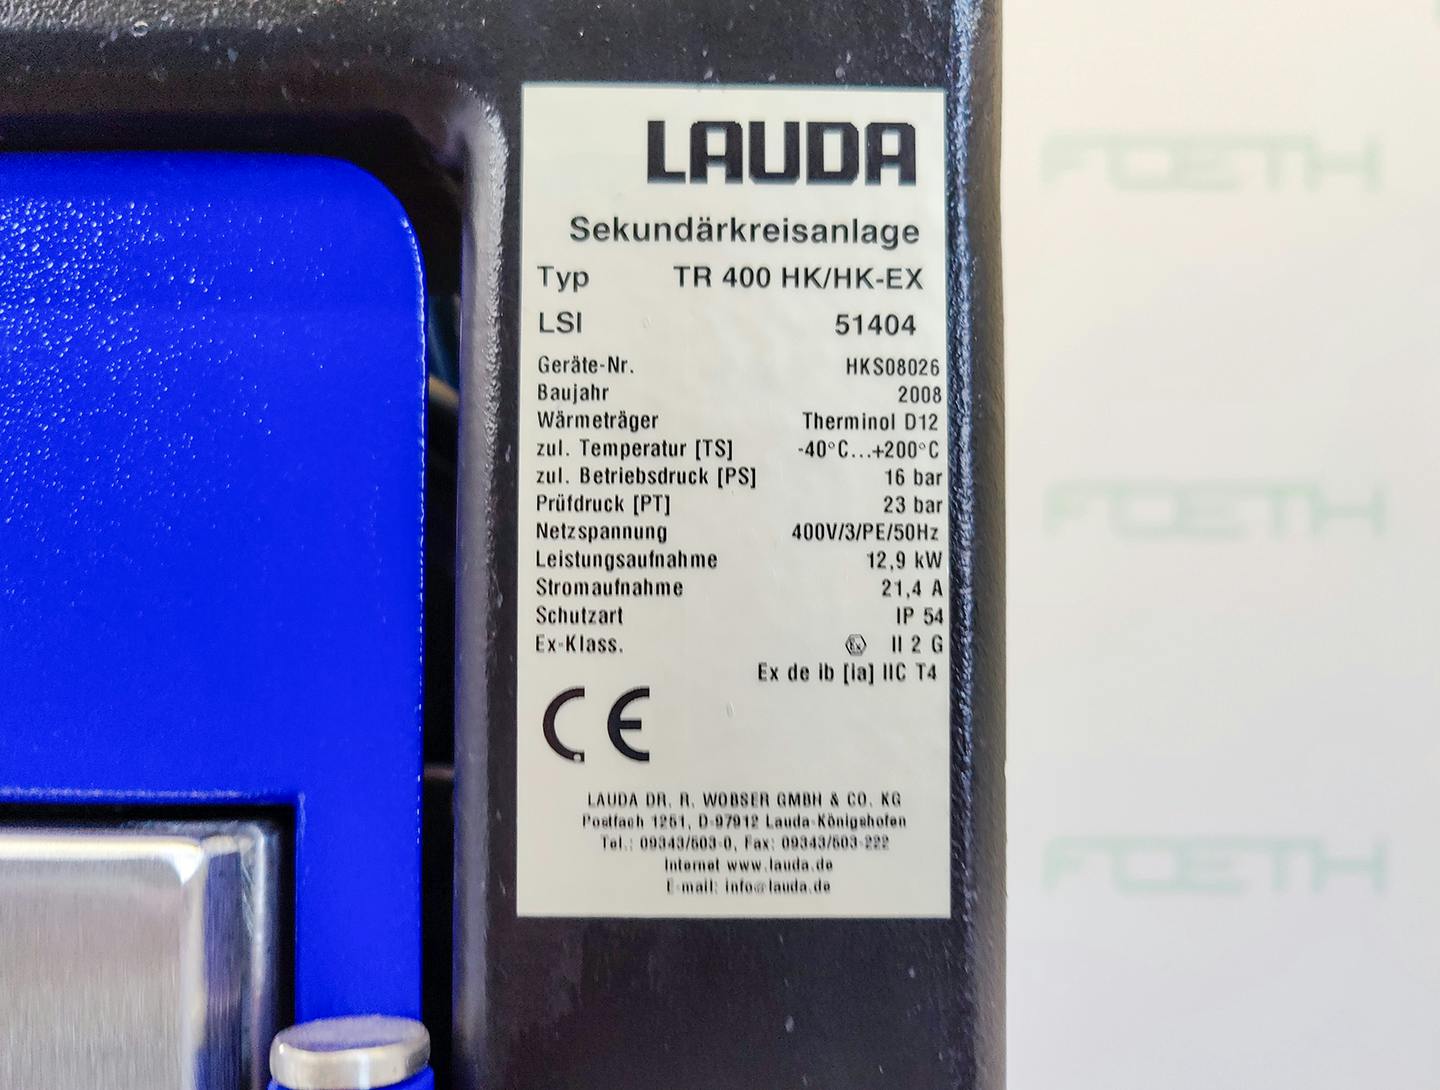 Lauda TR400 HK/HK-EX "secondary circuit system" - Temperiergerät - image 14